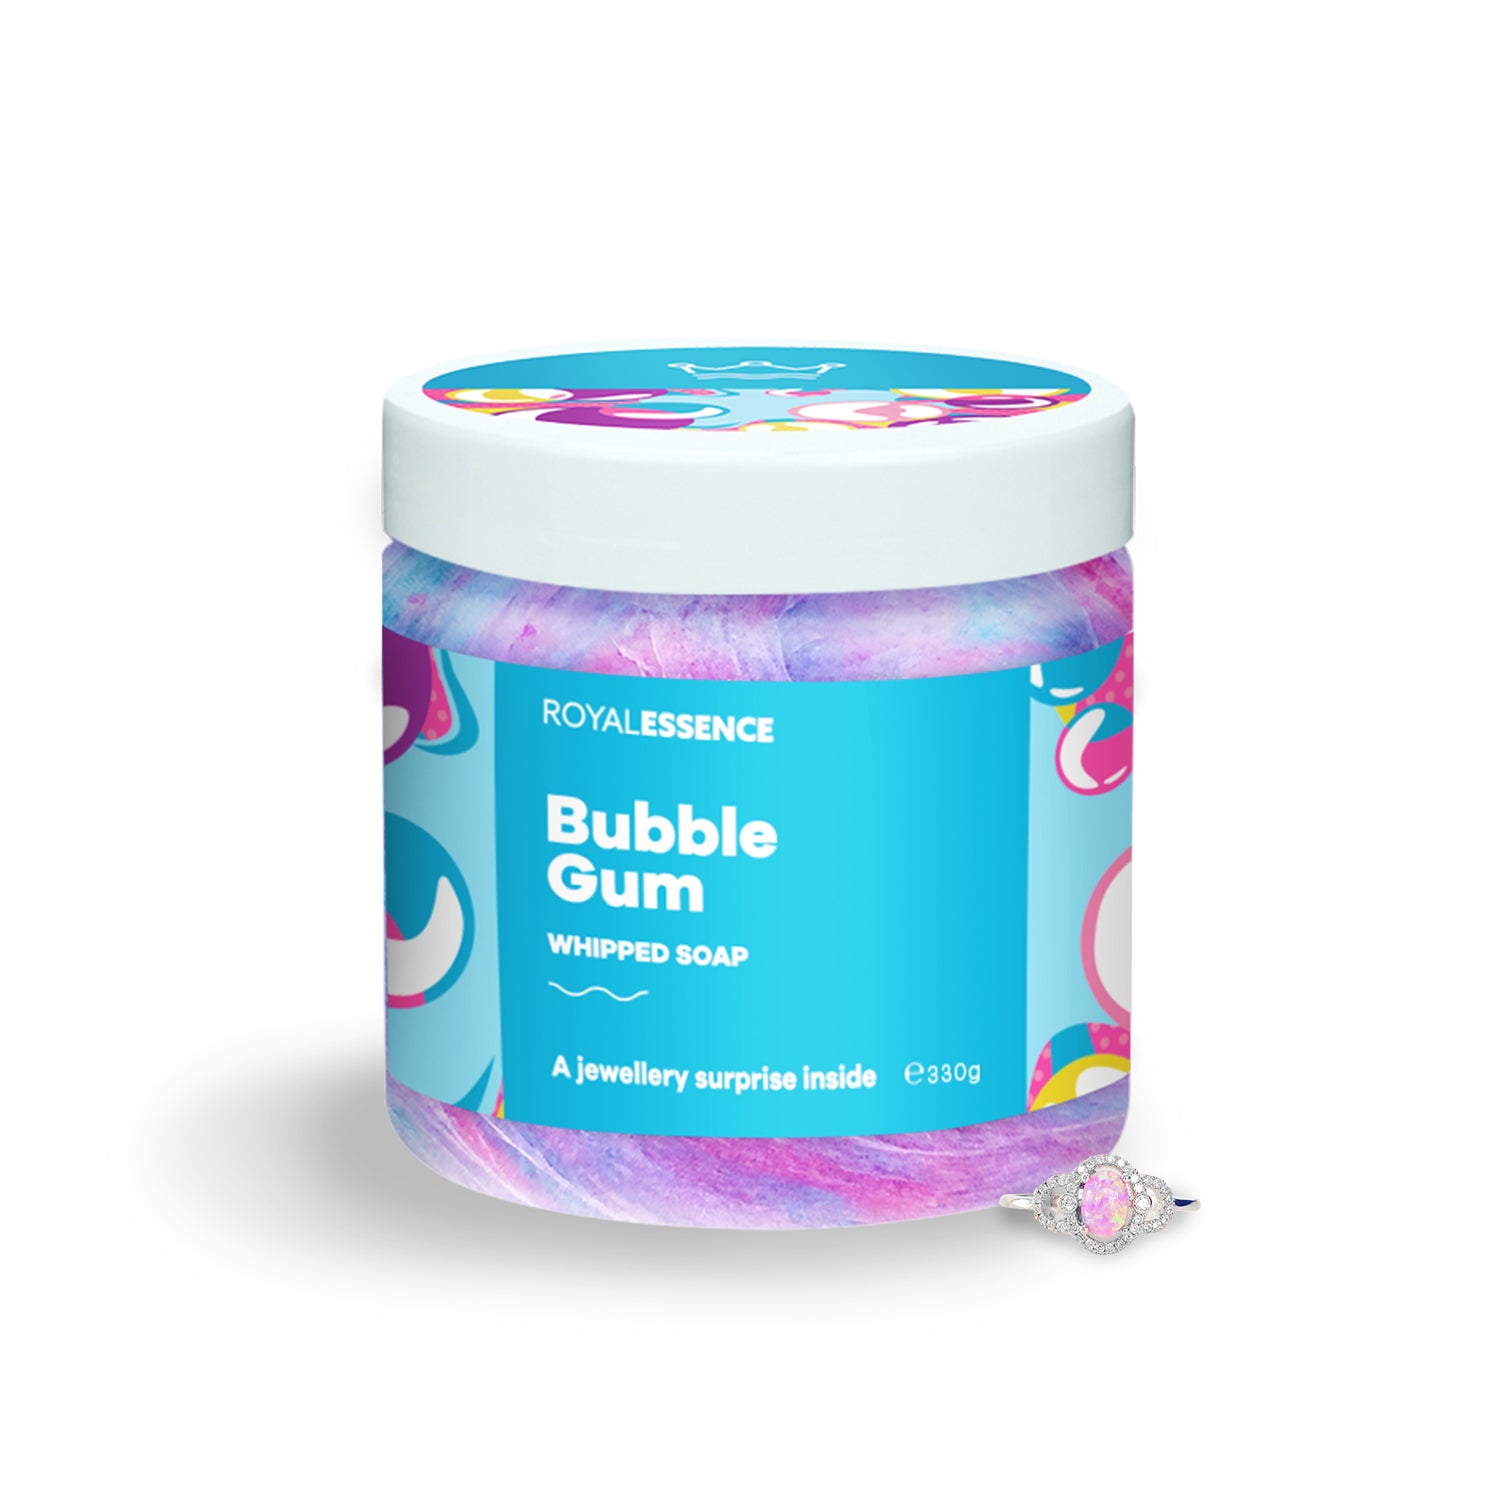 Bubble Gum (Whipped Soap)